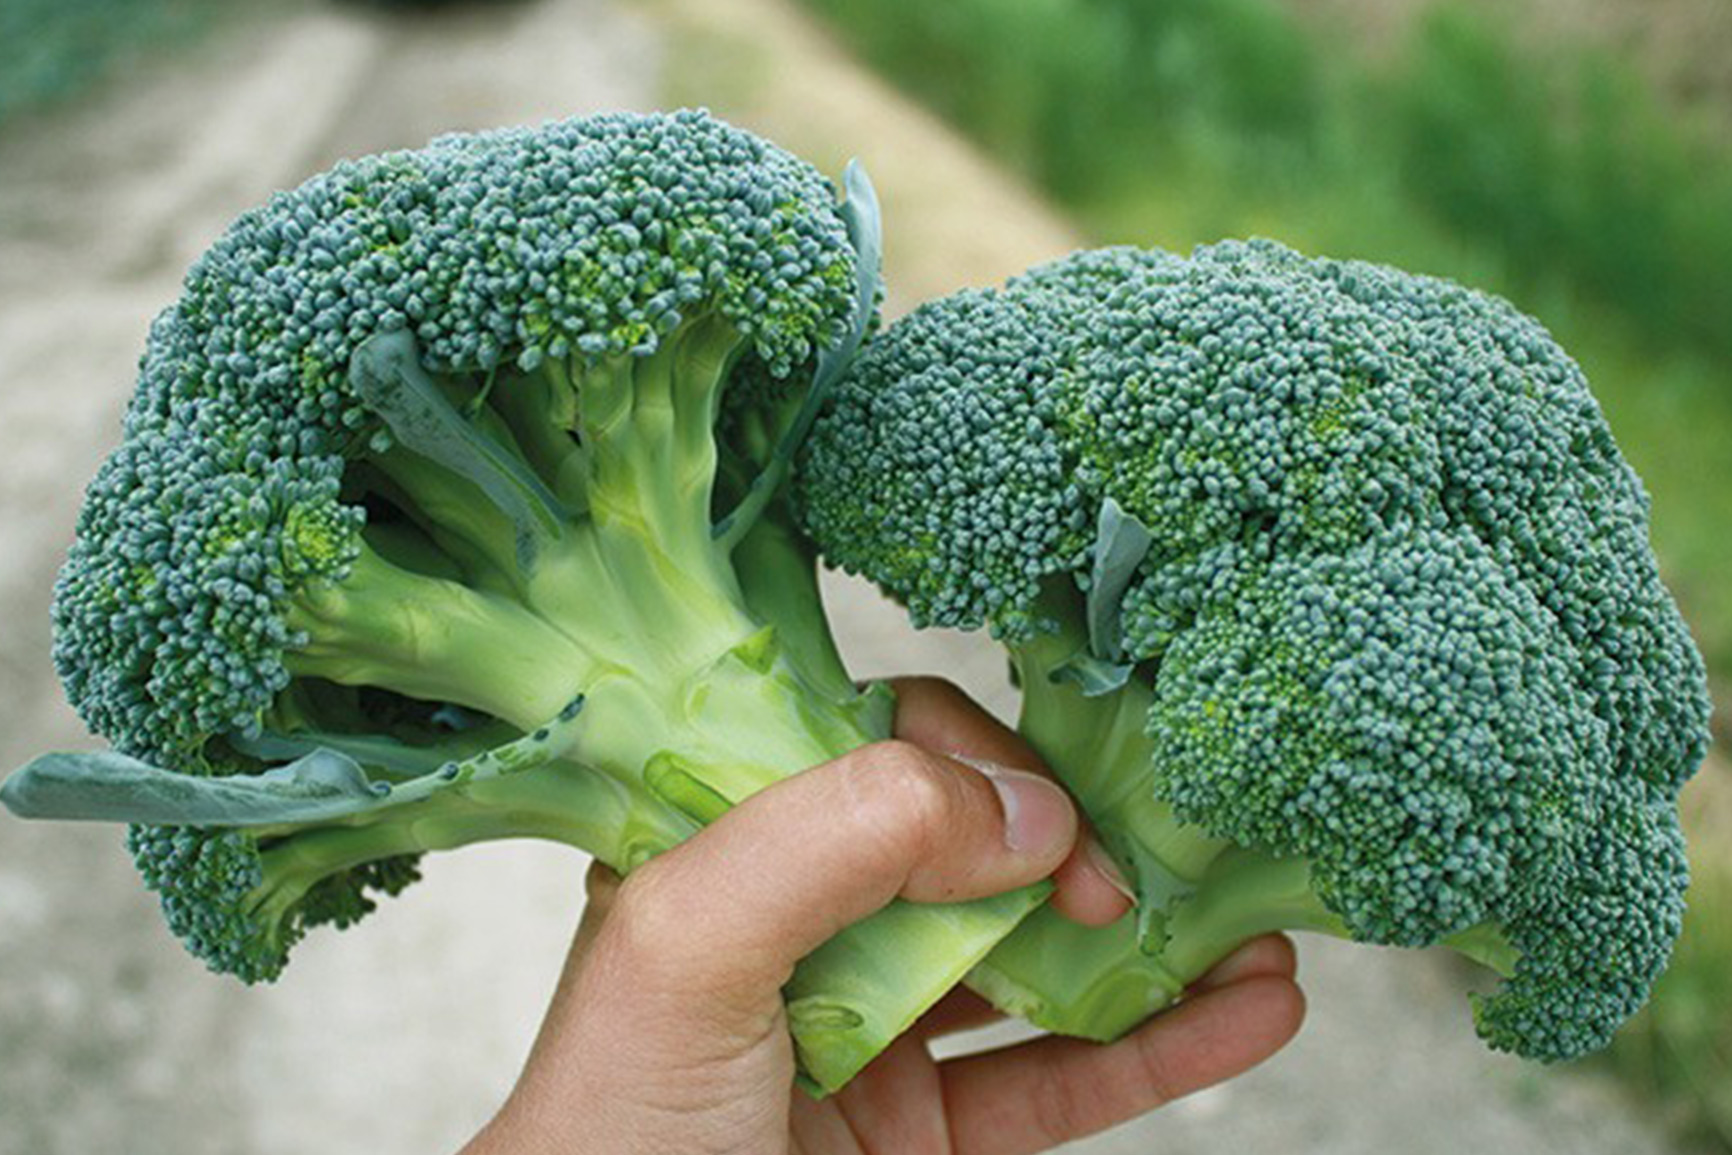 Broccoli - Bruinsma Bio Grower and packer of organic produce